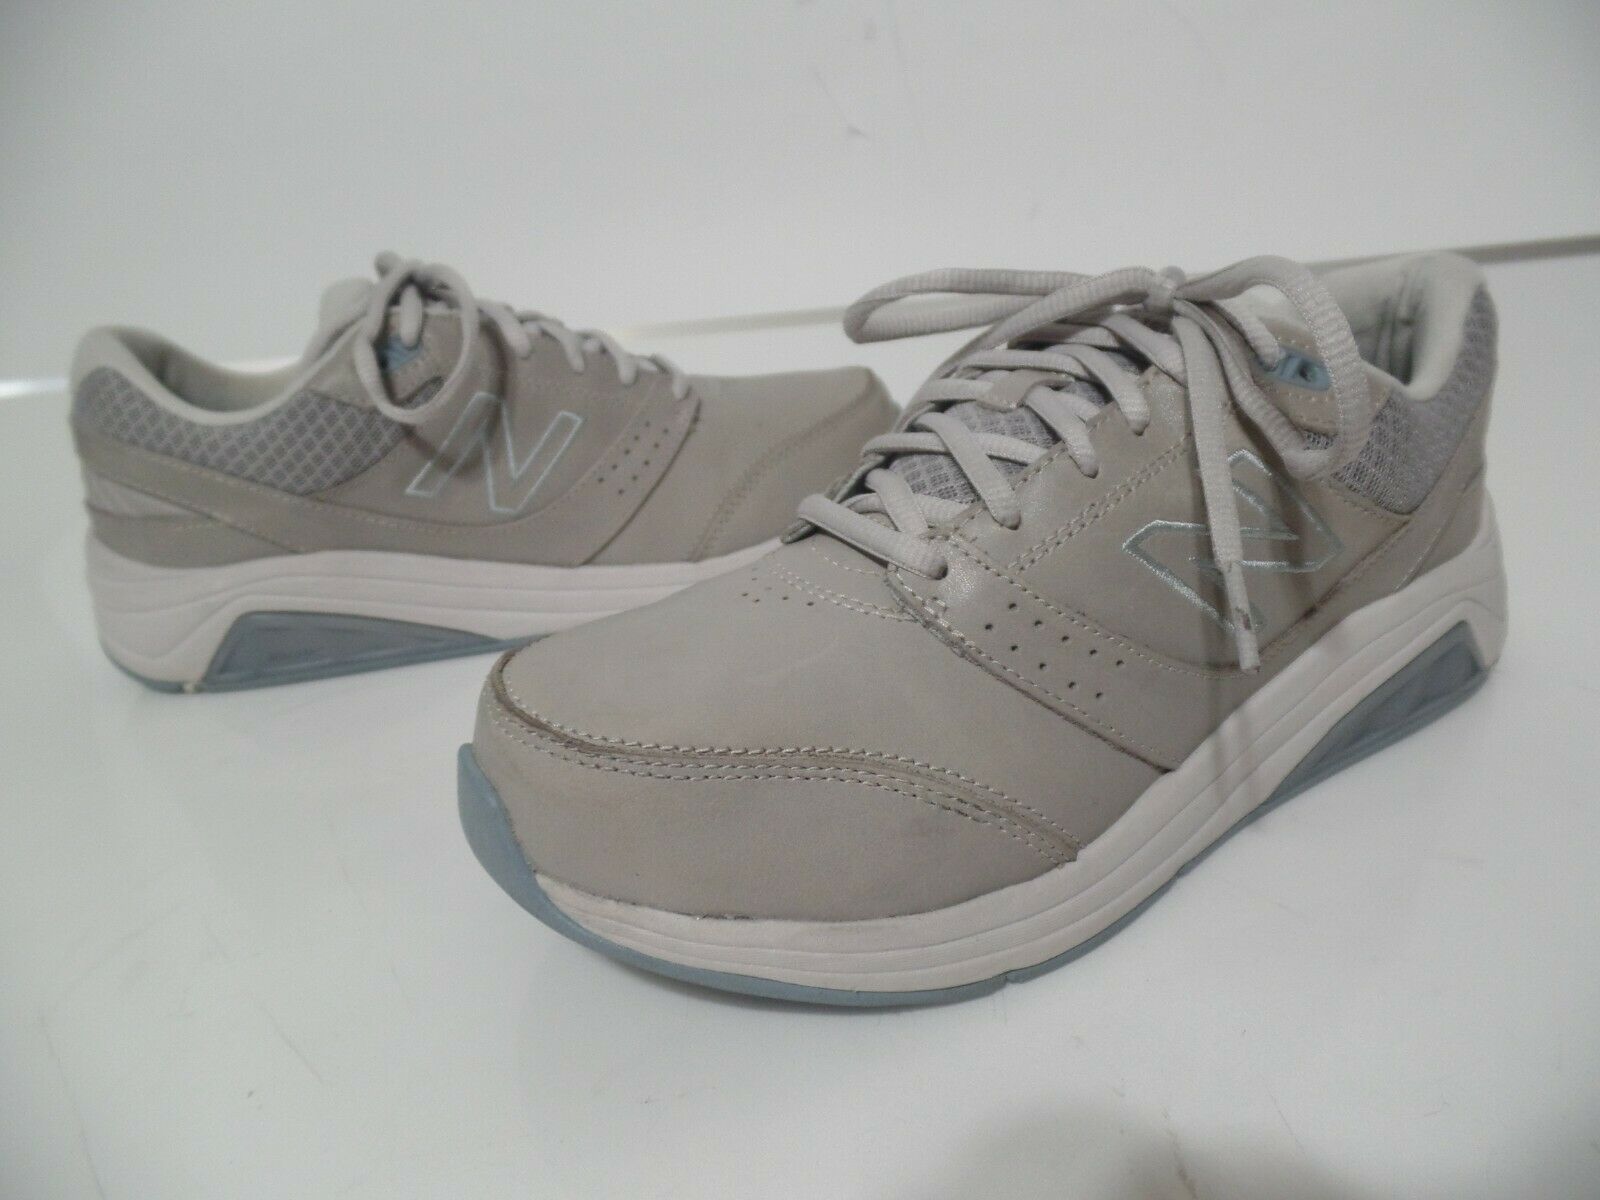 New Balance 928v2 Womens Sz 8B Narrow Gray Leather Senior Walking Athletic Shoes